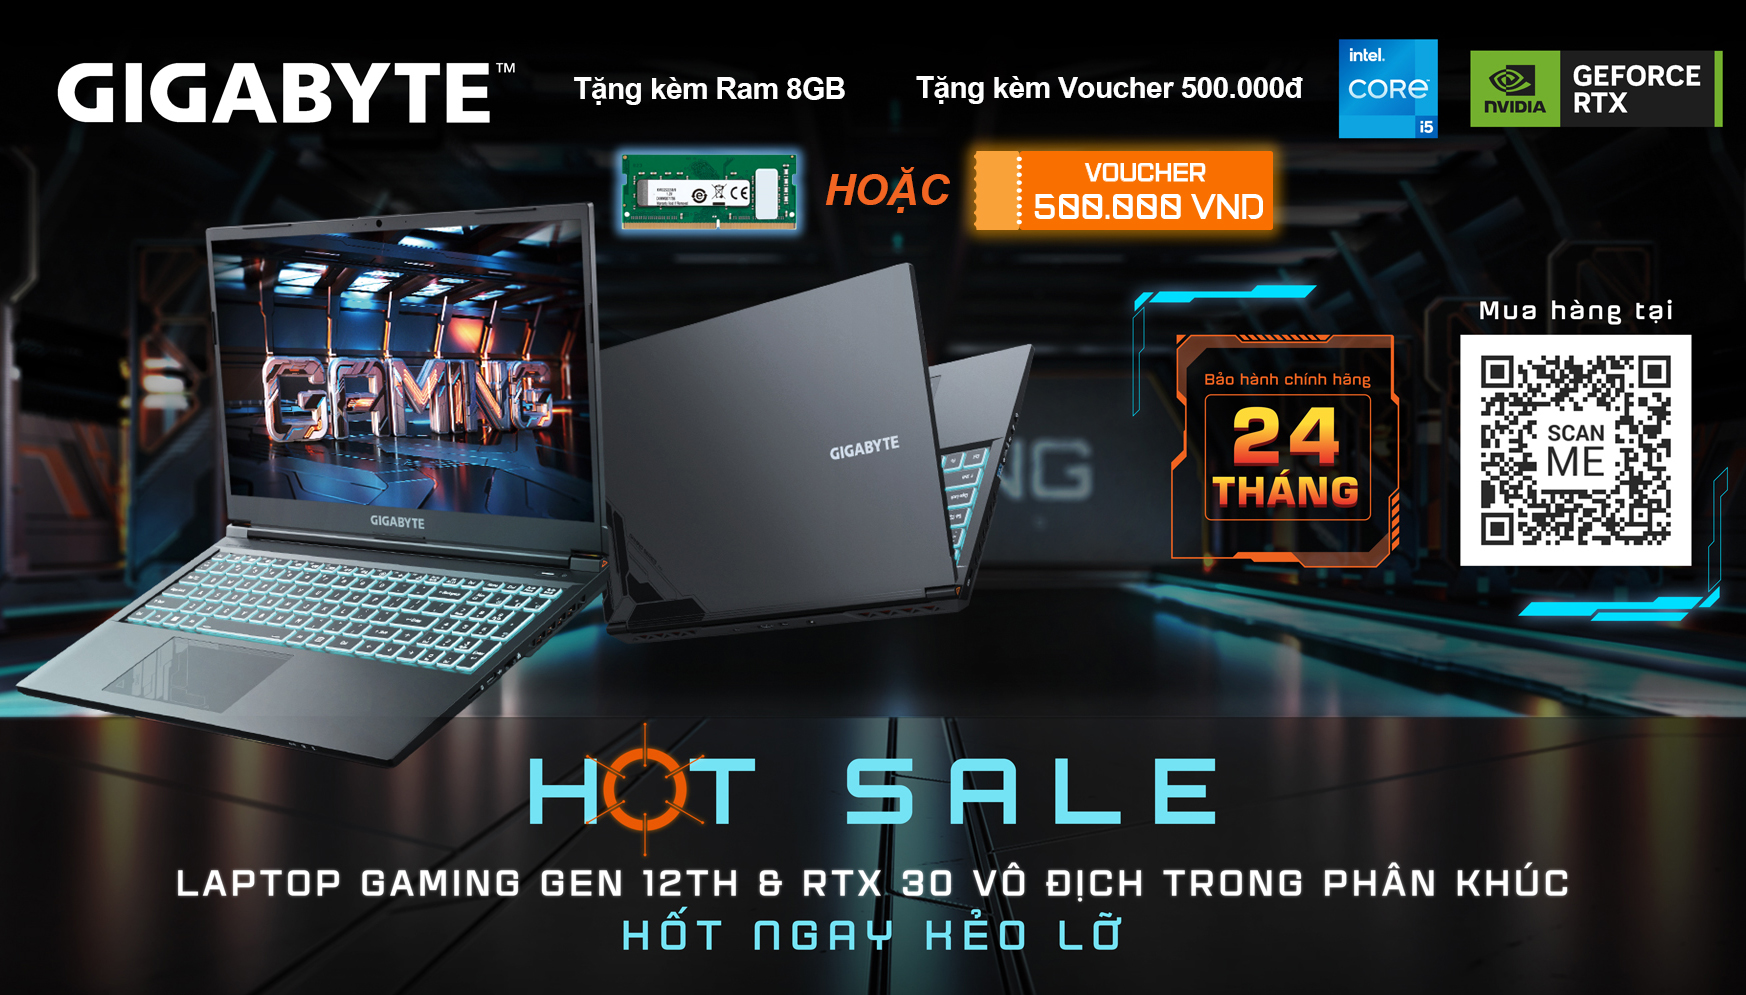 mua laptop gaming Gigabyte nhận ngay Ram 8GB hoặc Voucher 500K